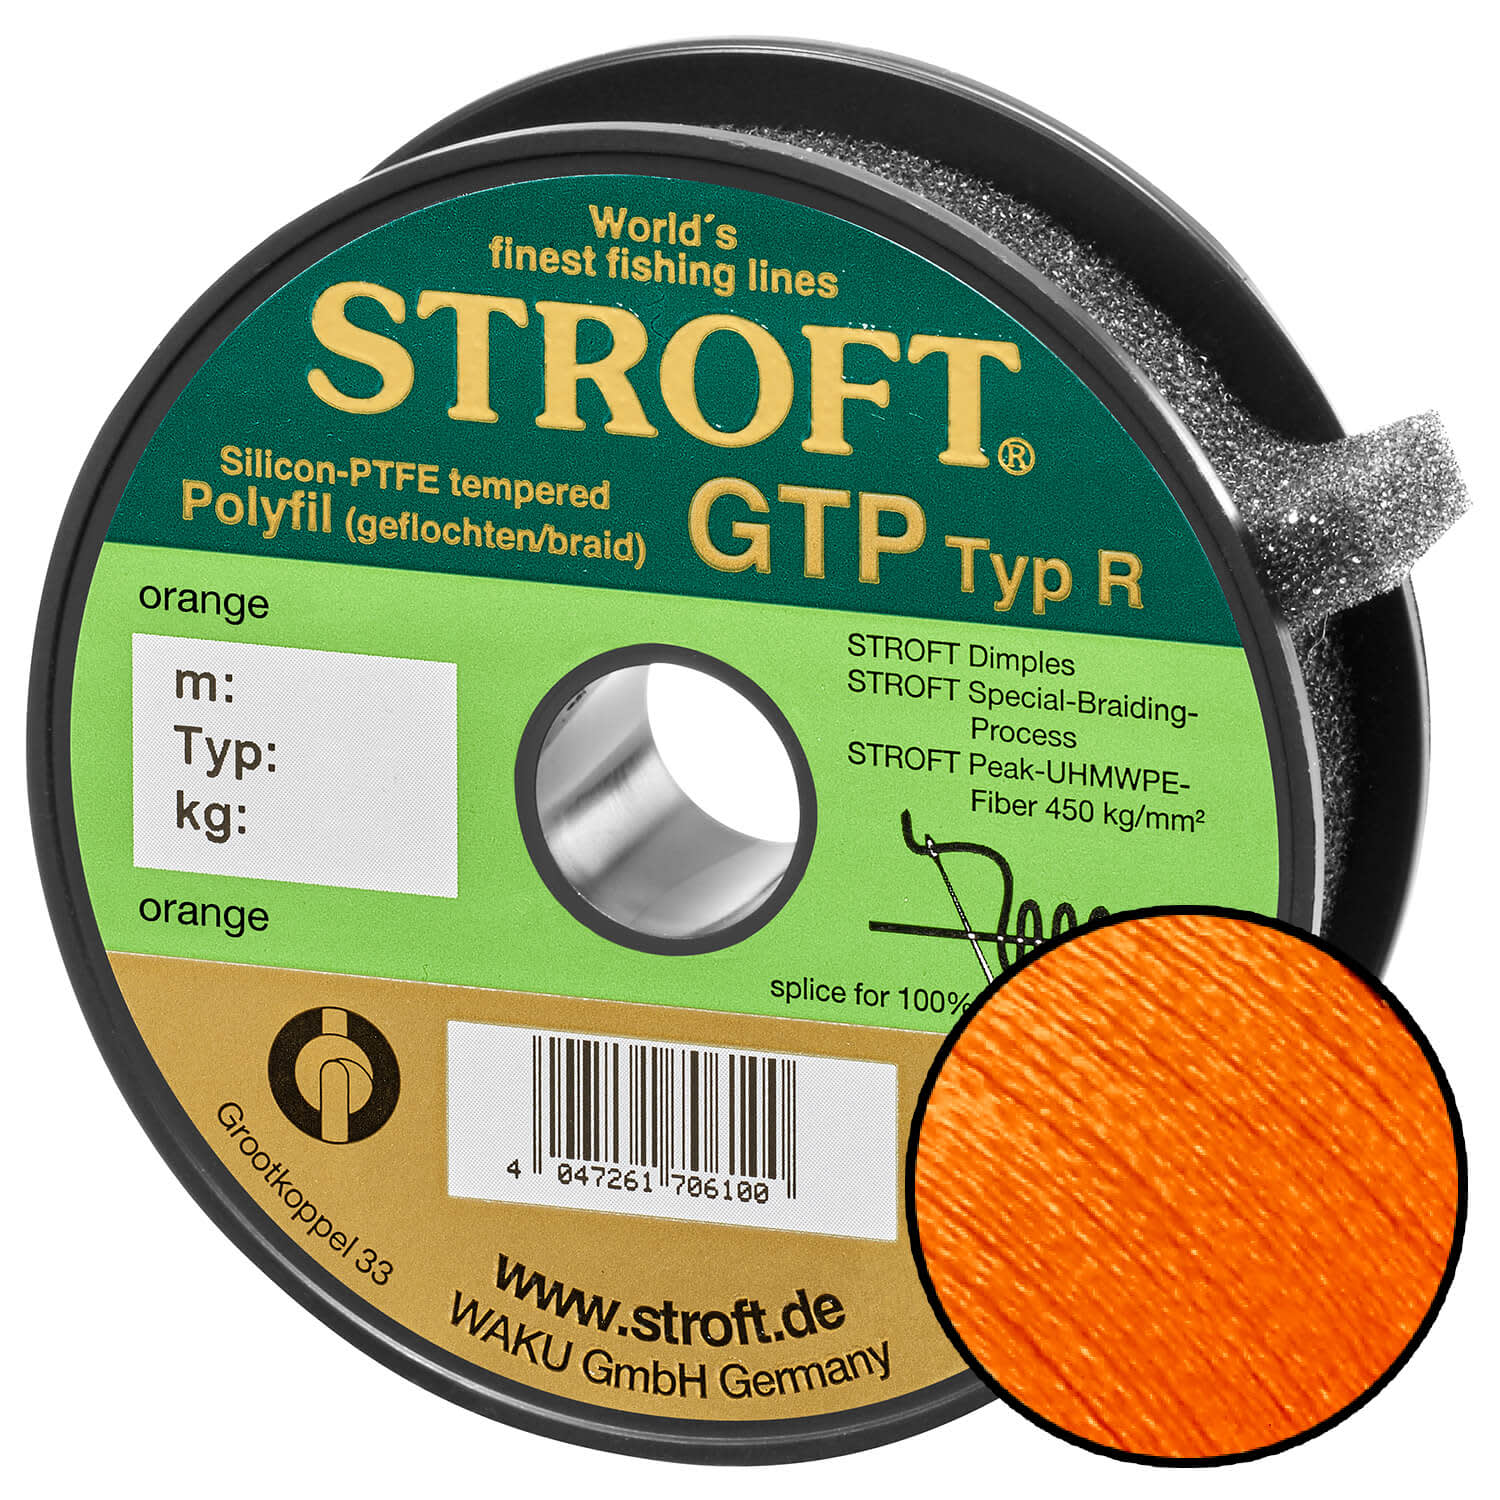 STROFT GTP Type R Braided Fishing Line 150m orange buy by Koeder Laden